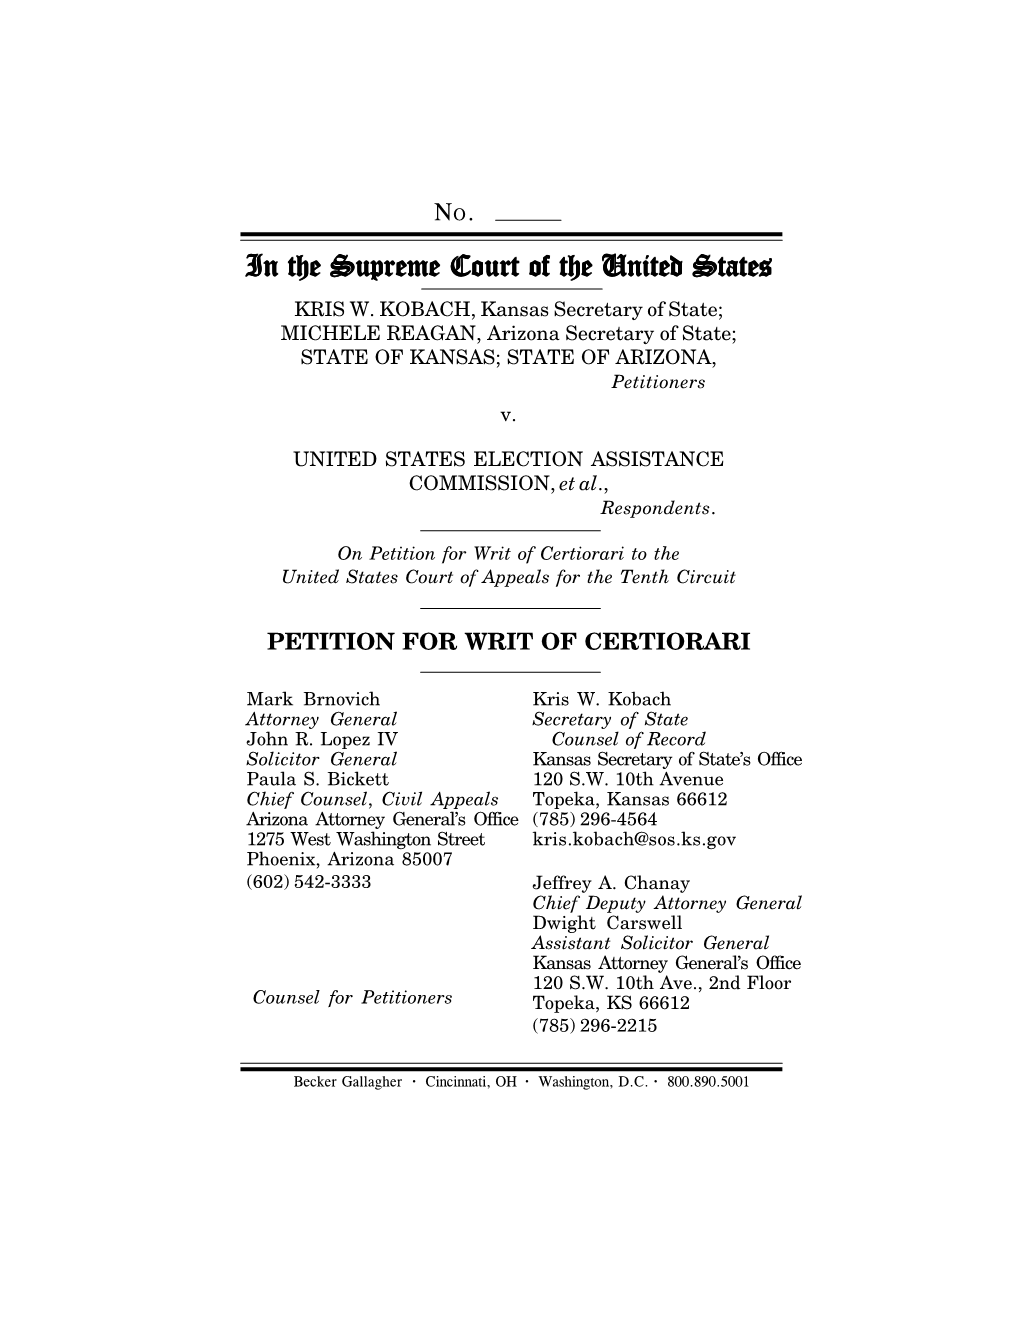 Petition for Writ of Certiorari from Kansas and Arizona